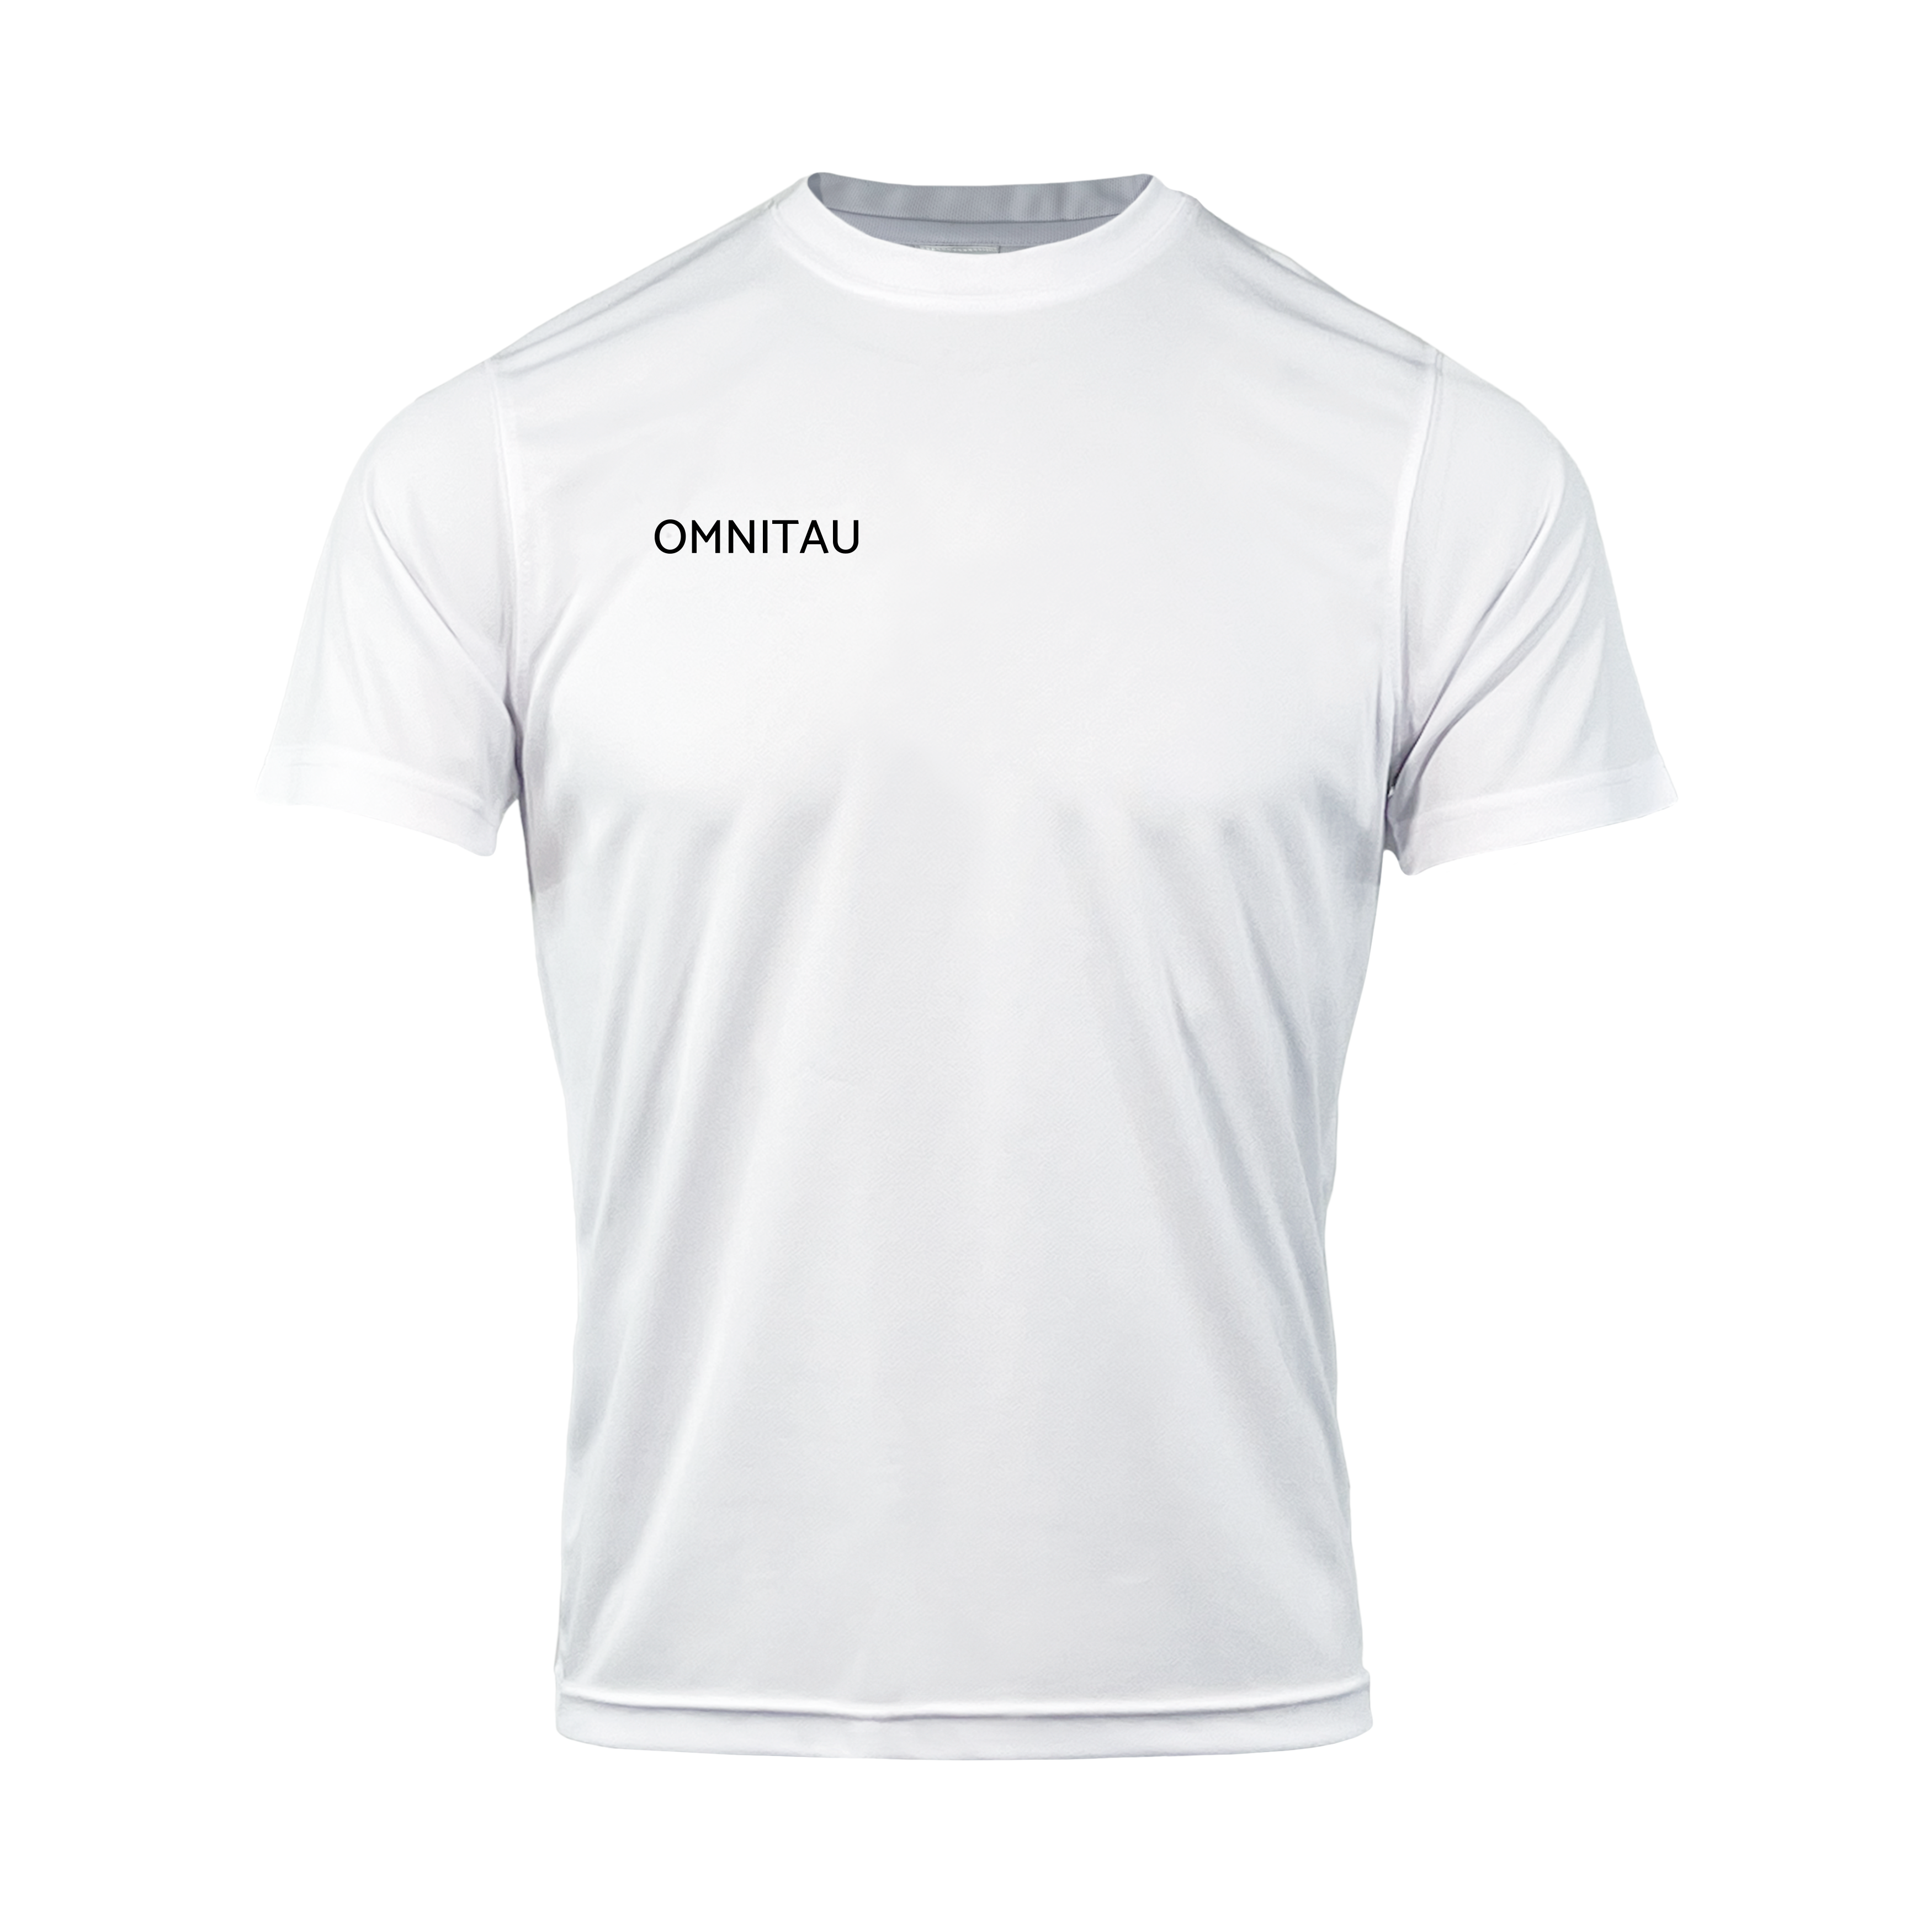 Omnitau Kid's Team Sports Core Football Shirt- White